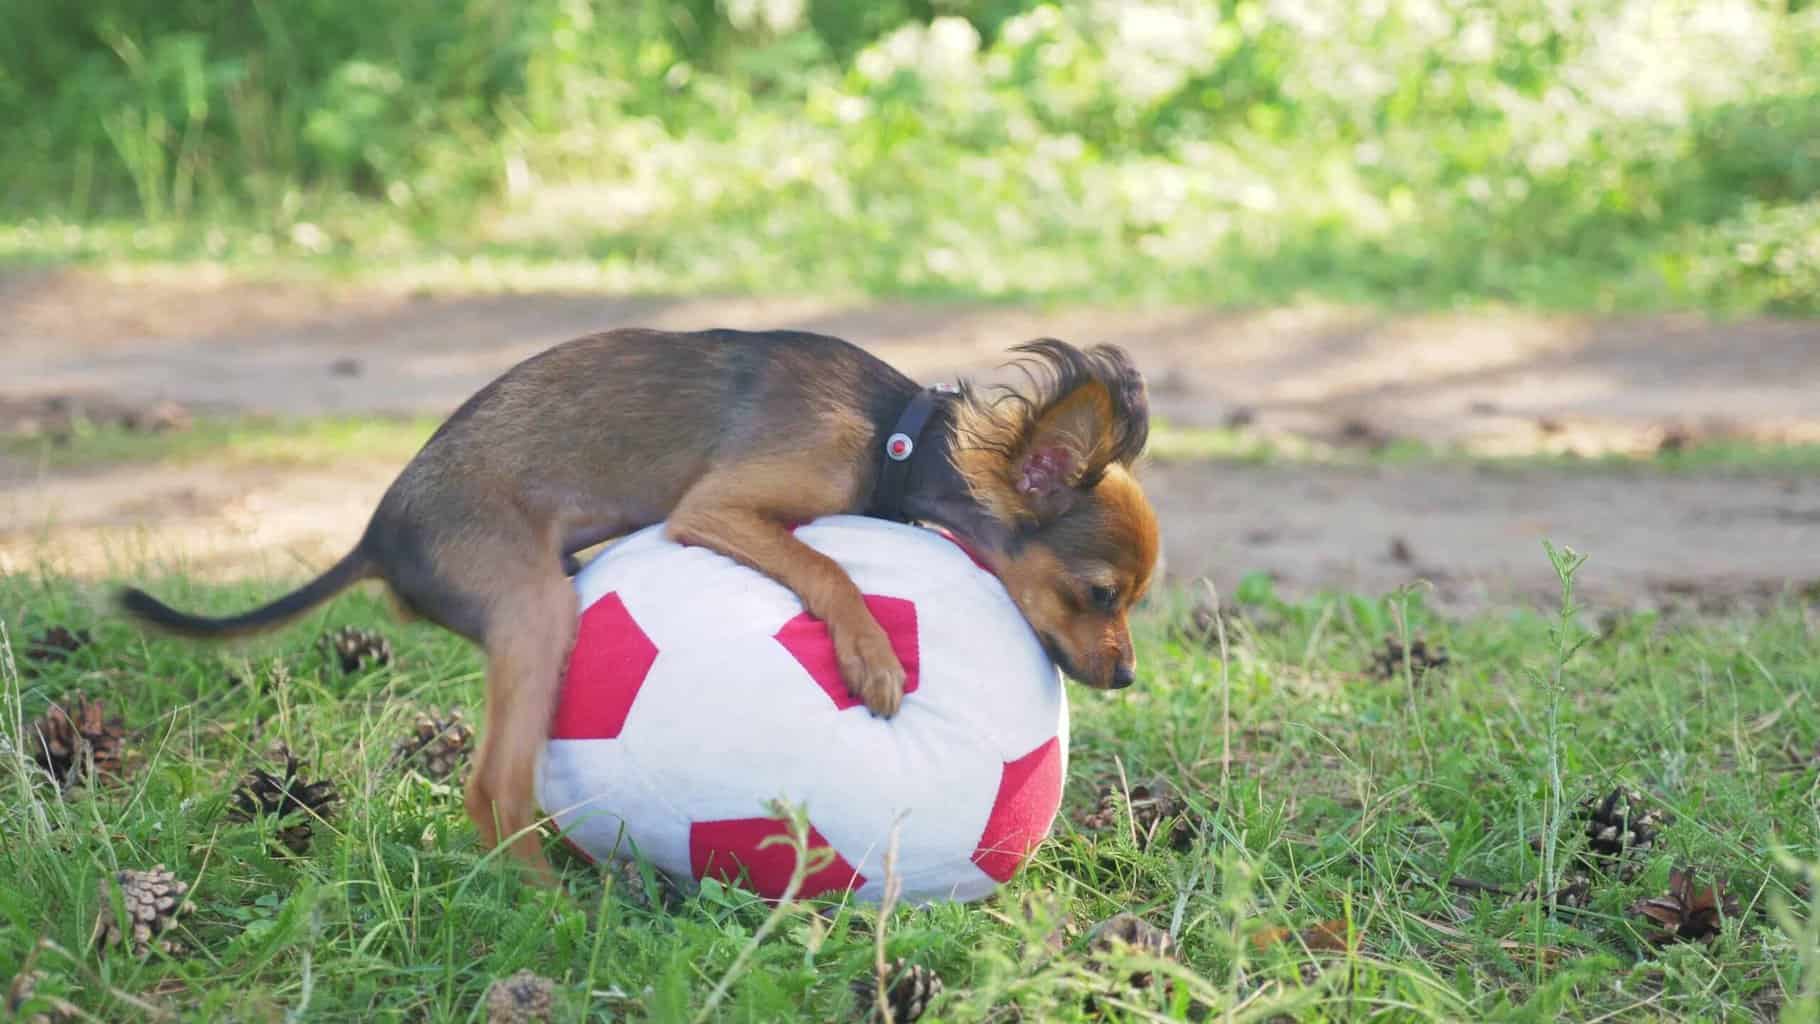 dog humping a ball